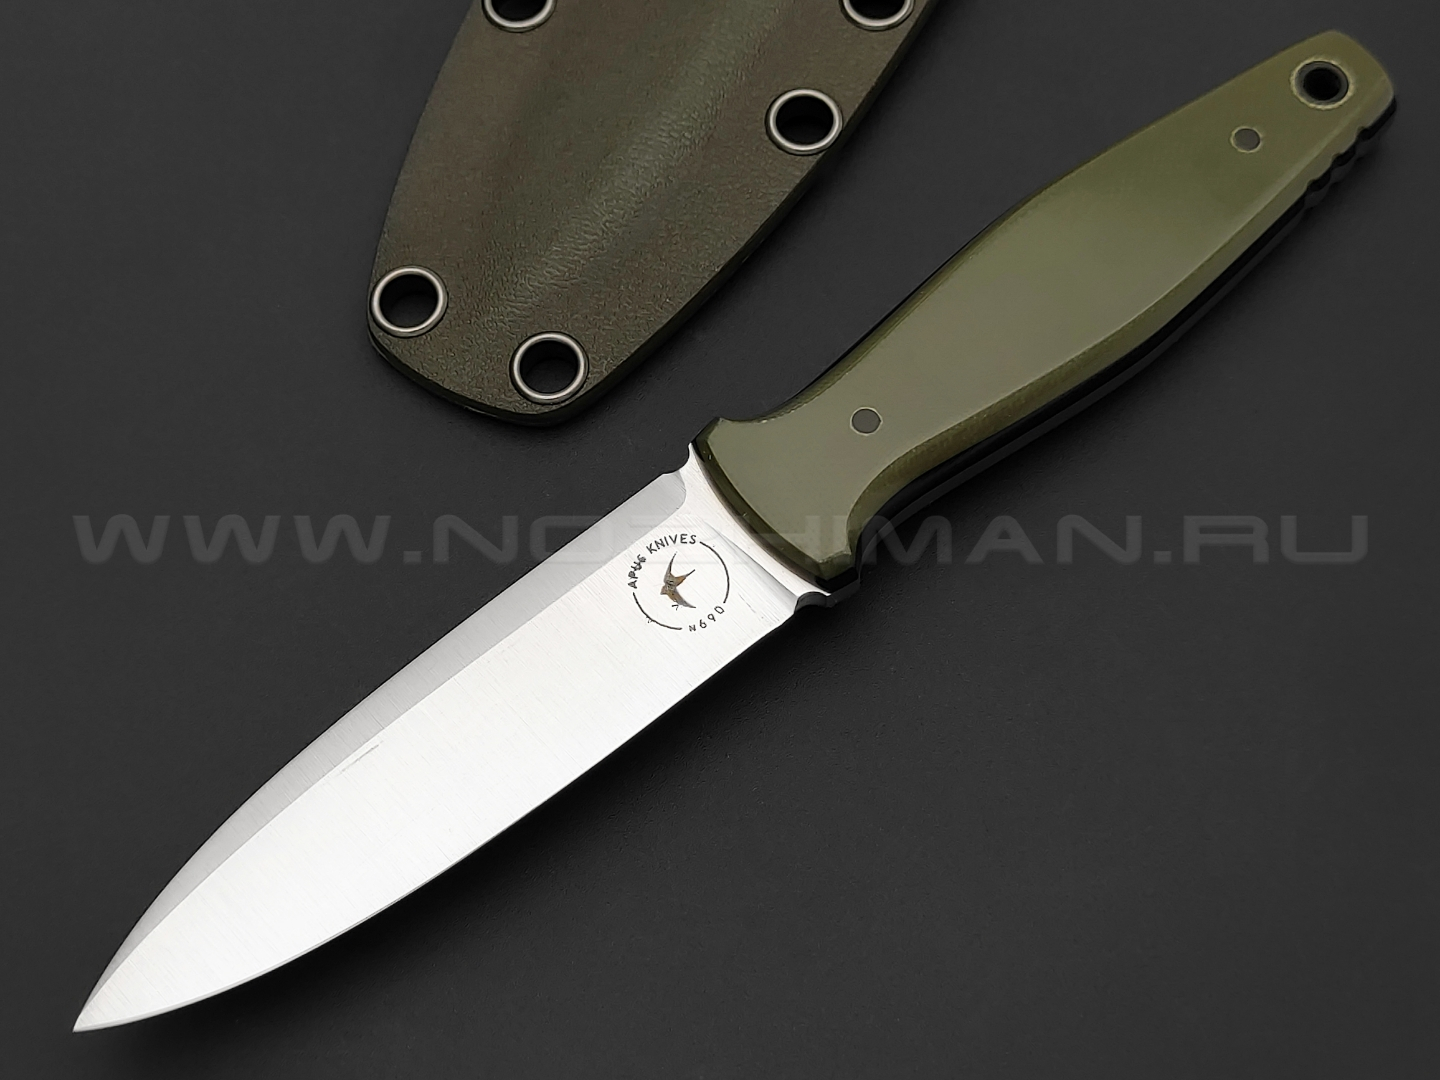 Apus Knives нож Jiger mini сталь N690, рукоять G10 OD green